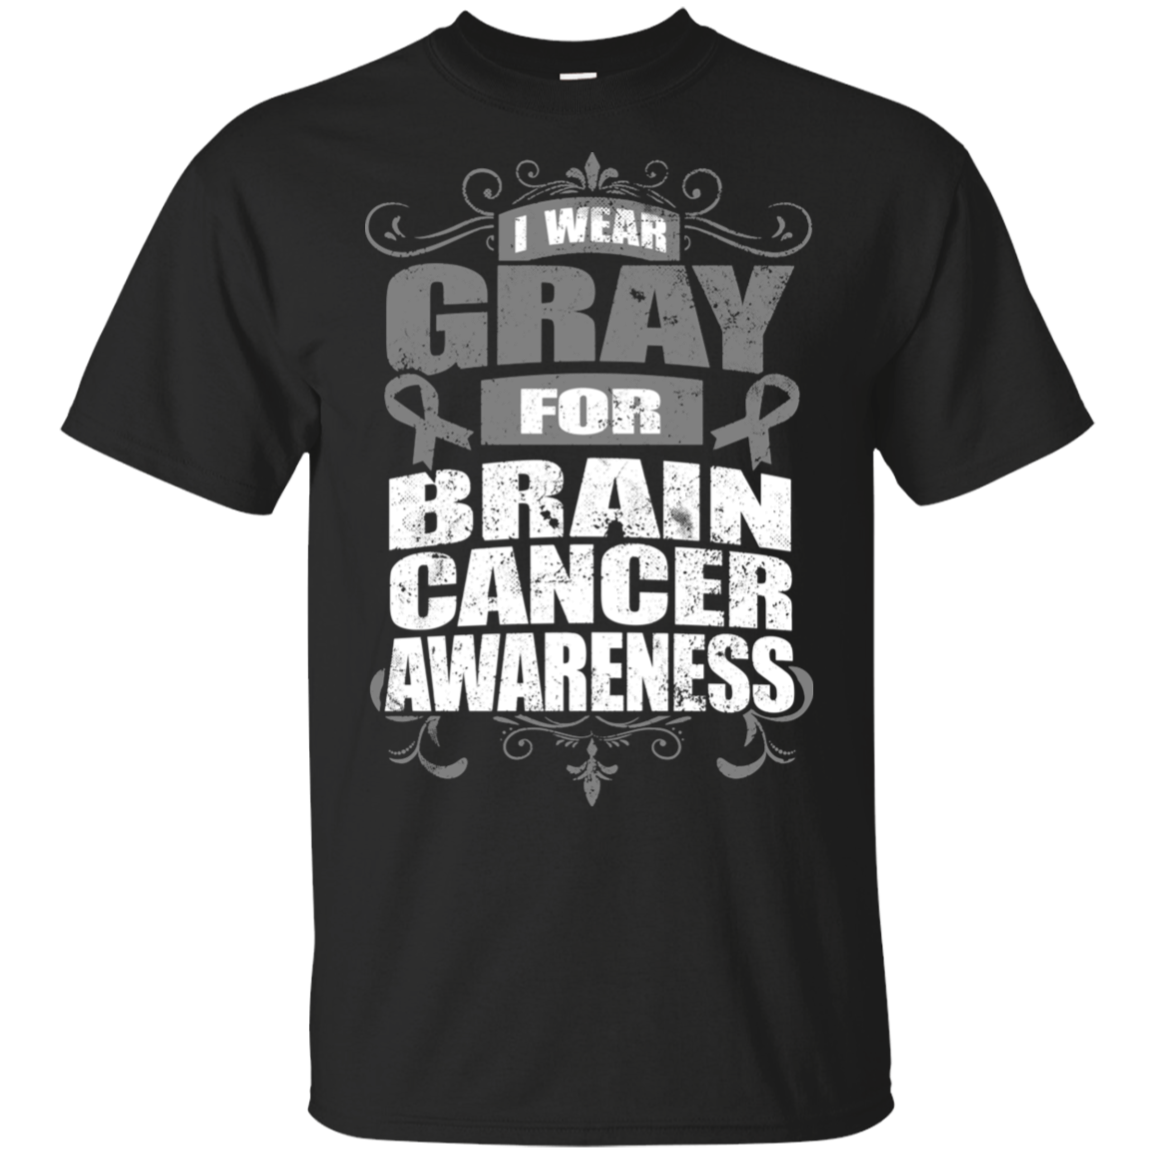 I Wear Gray for Brain Cancer Awareness! T-shirt – The Awareness Store